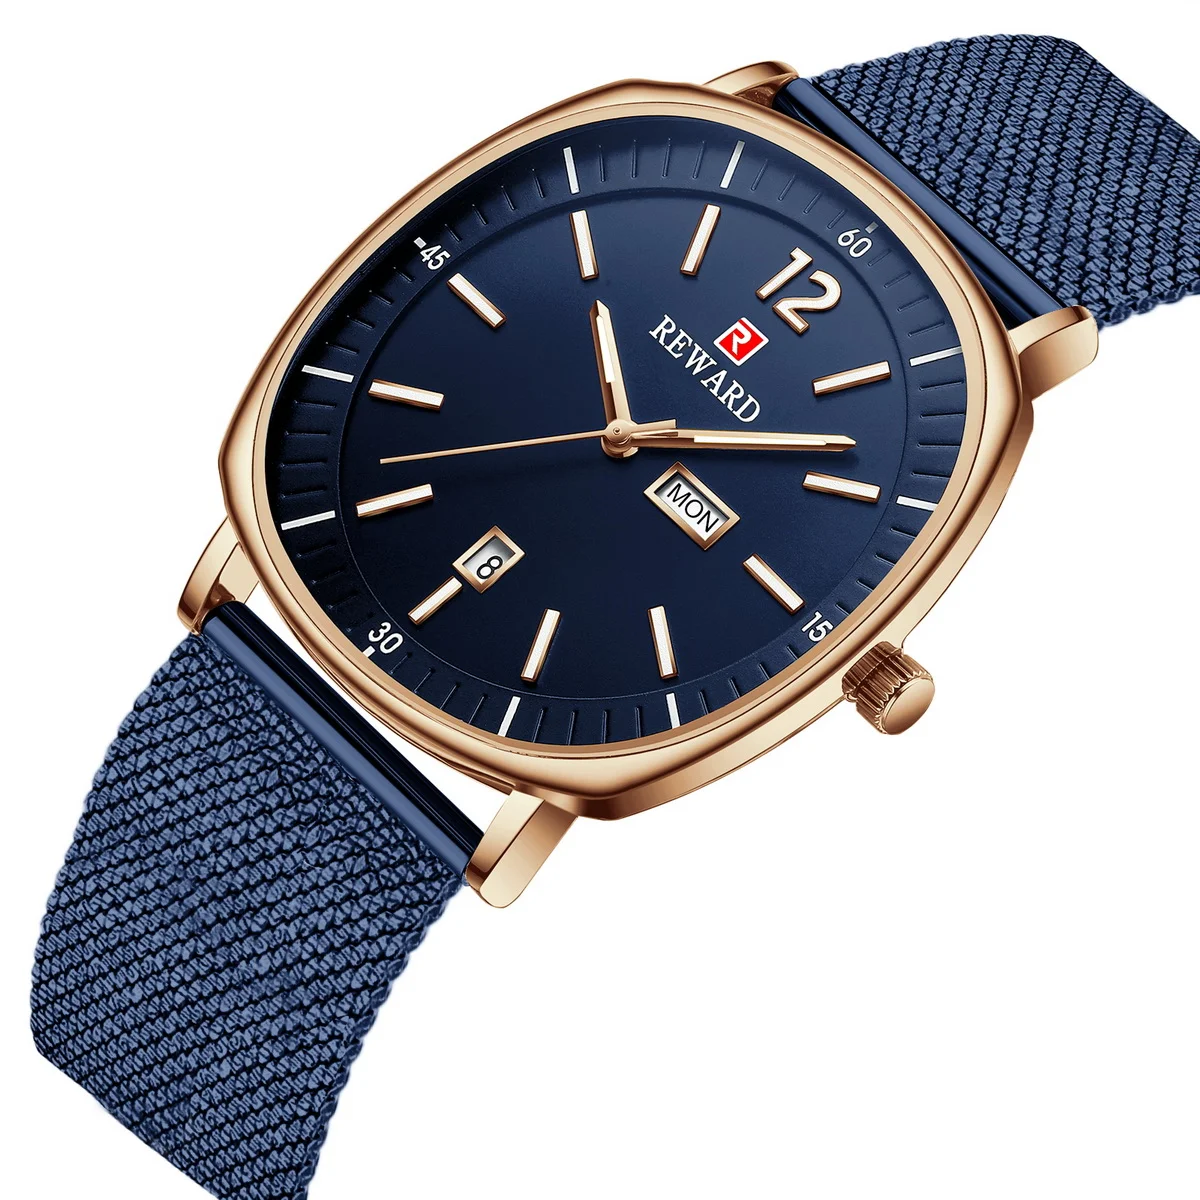 Reward New Arrivals simple quartz watches gift on birthday Cheap price alloy watch